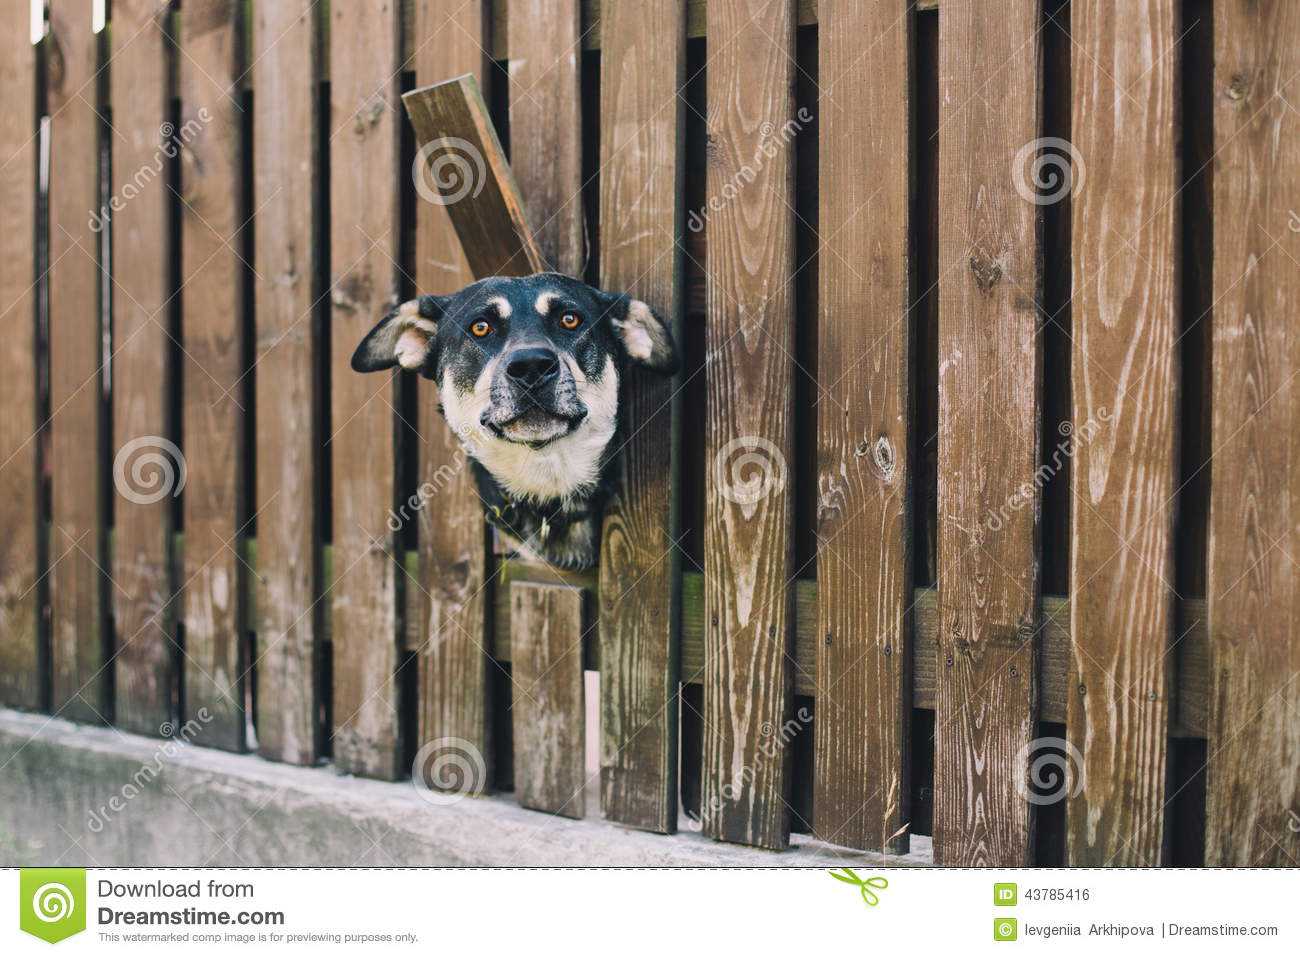 dog-looking-hole-fence-curious-43785416.jpg